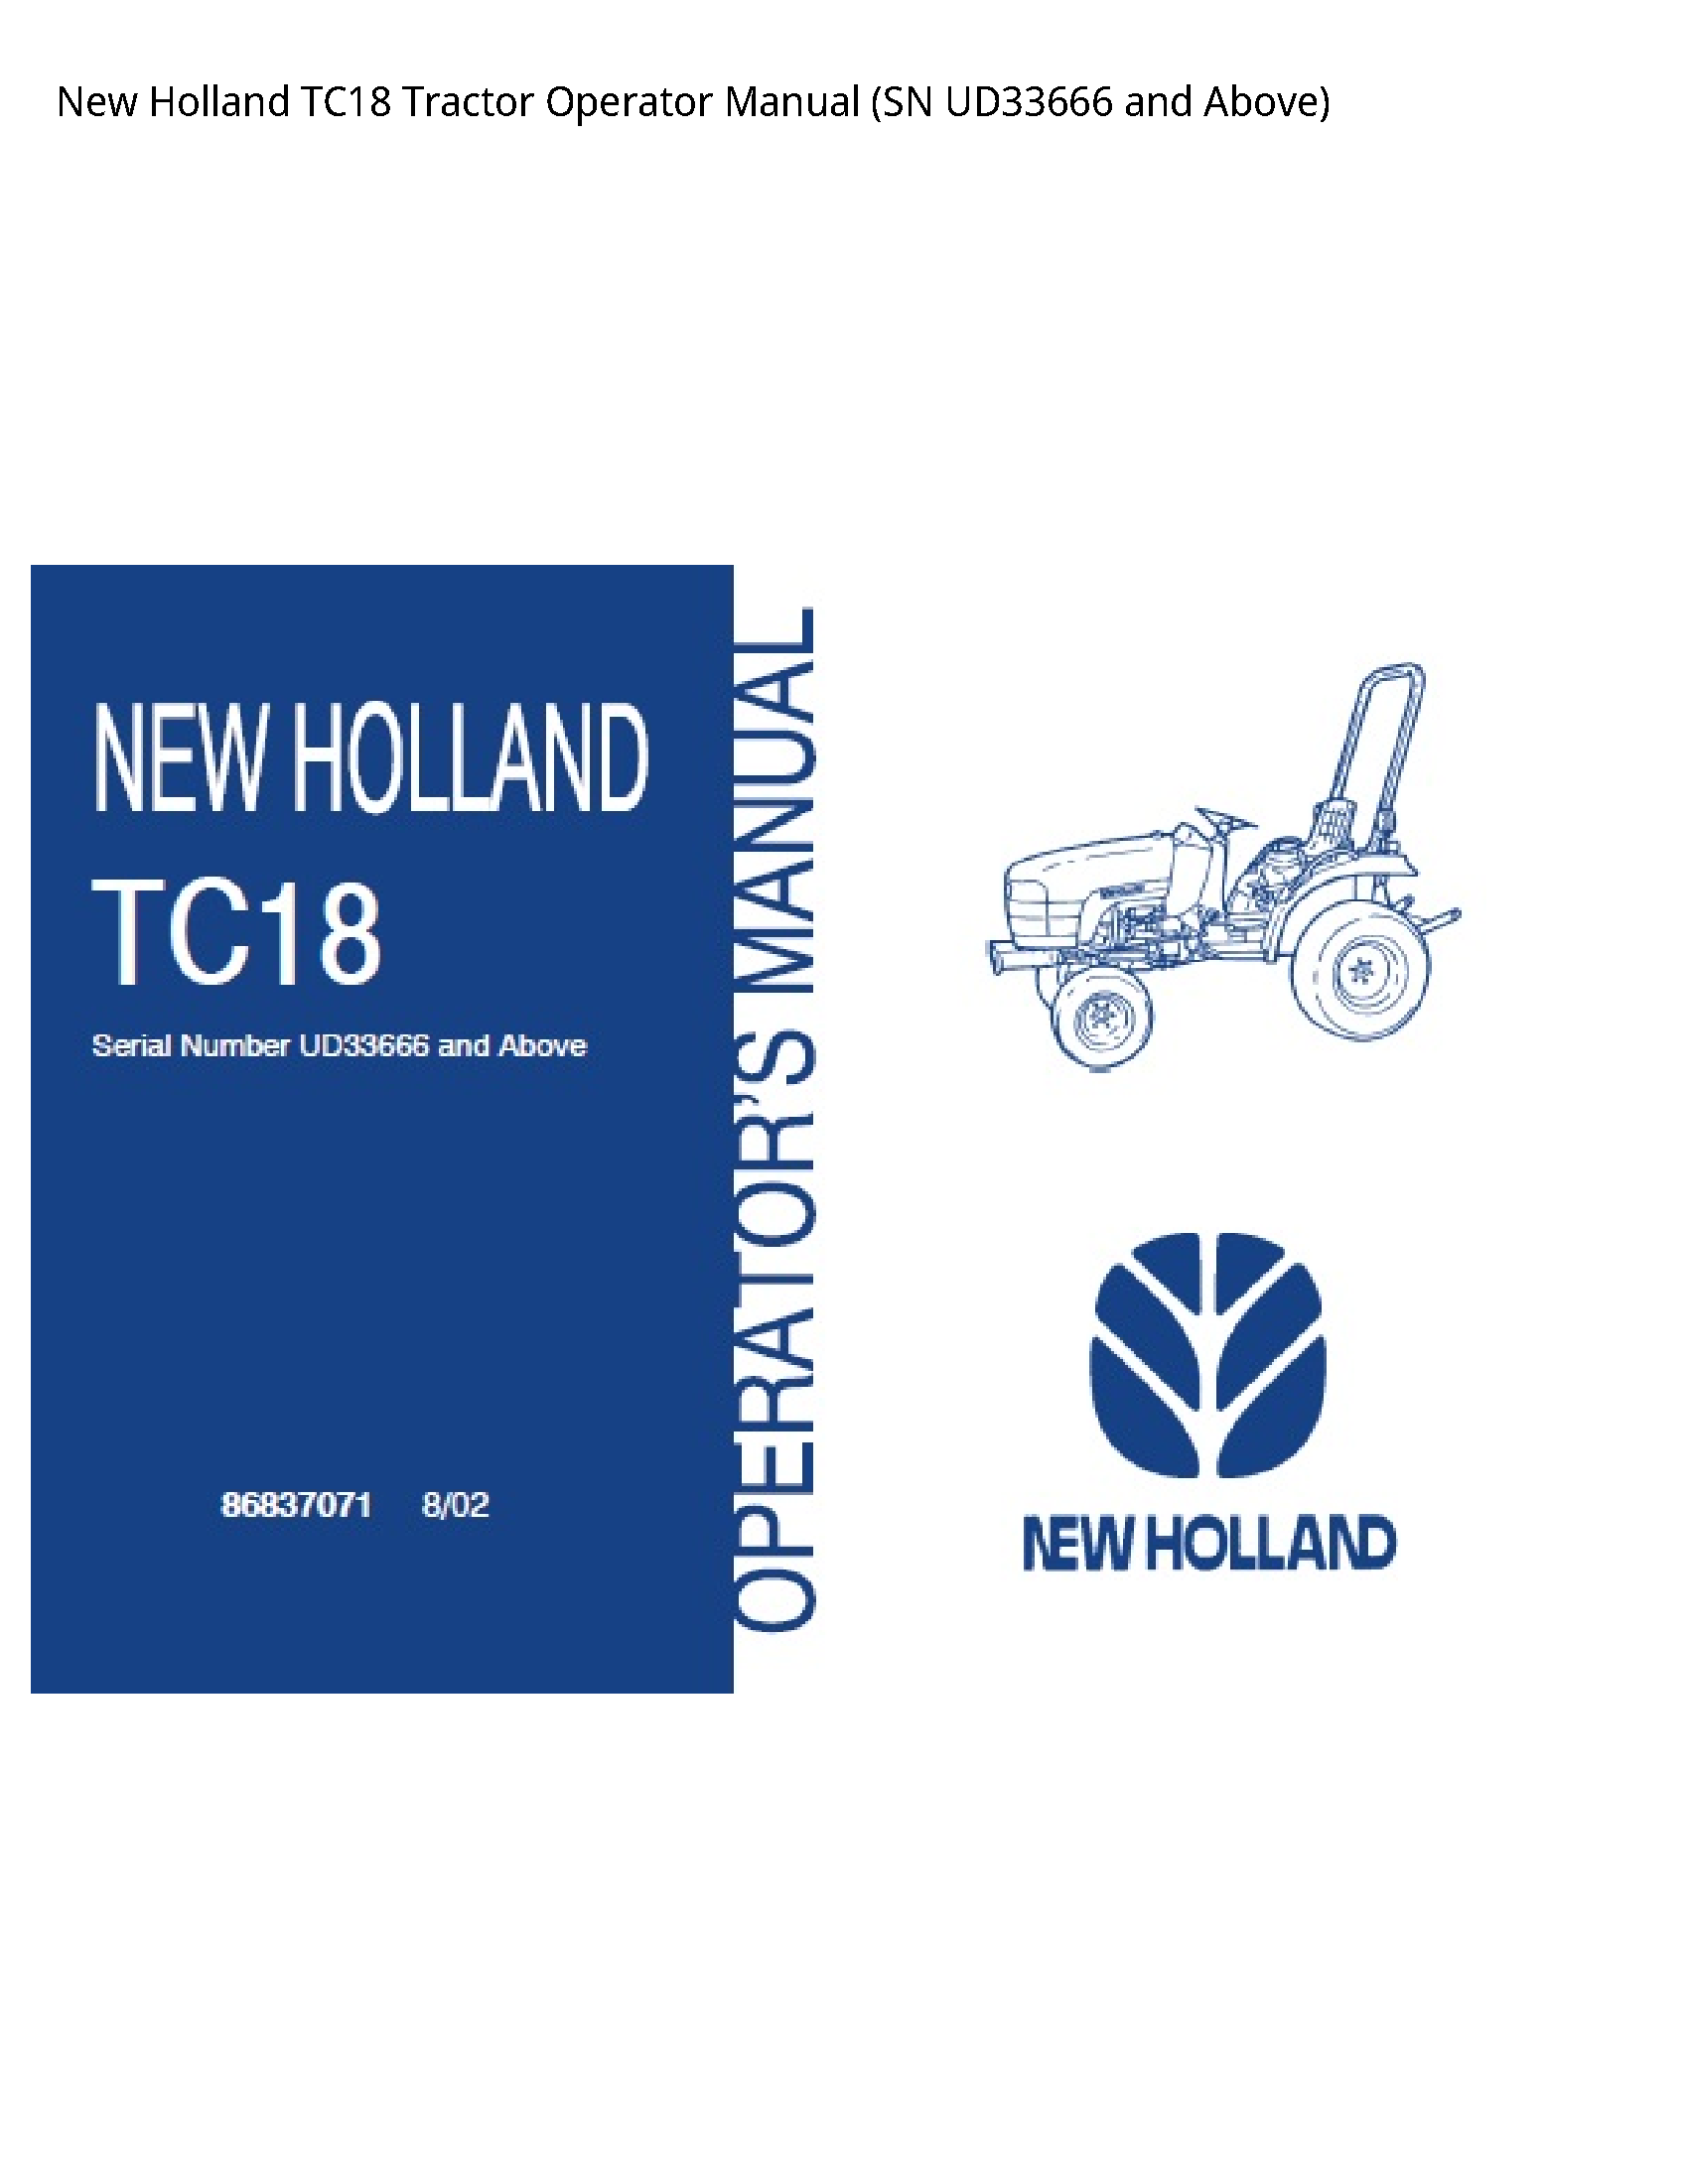 New Holland TC18 Tractor Operator manual